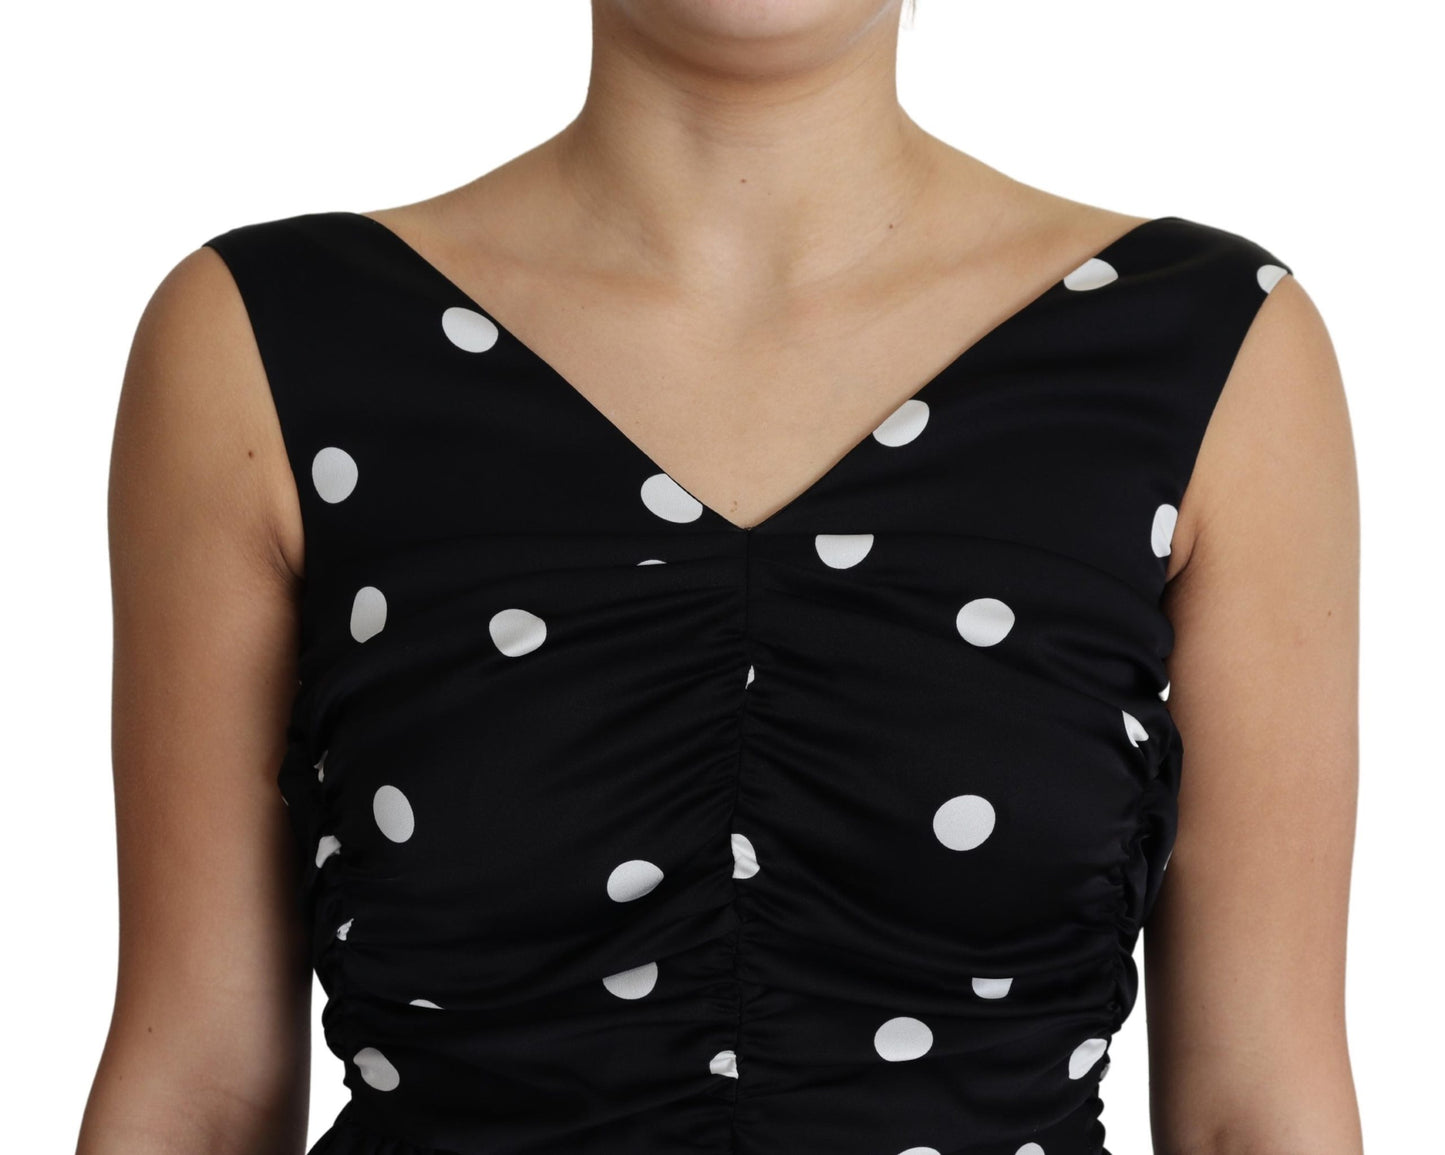 Black Polka Dots Charmeuse Ruffle Mini Dress